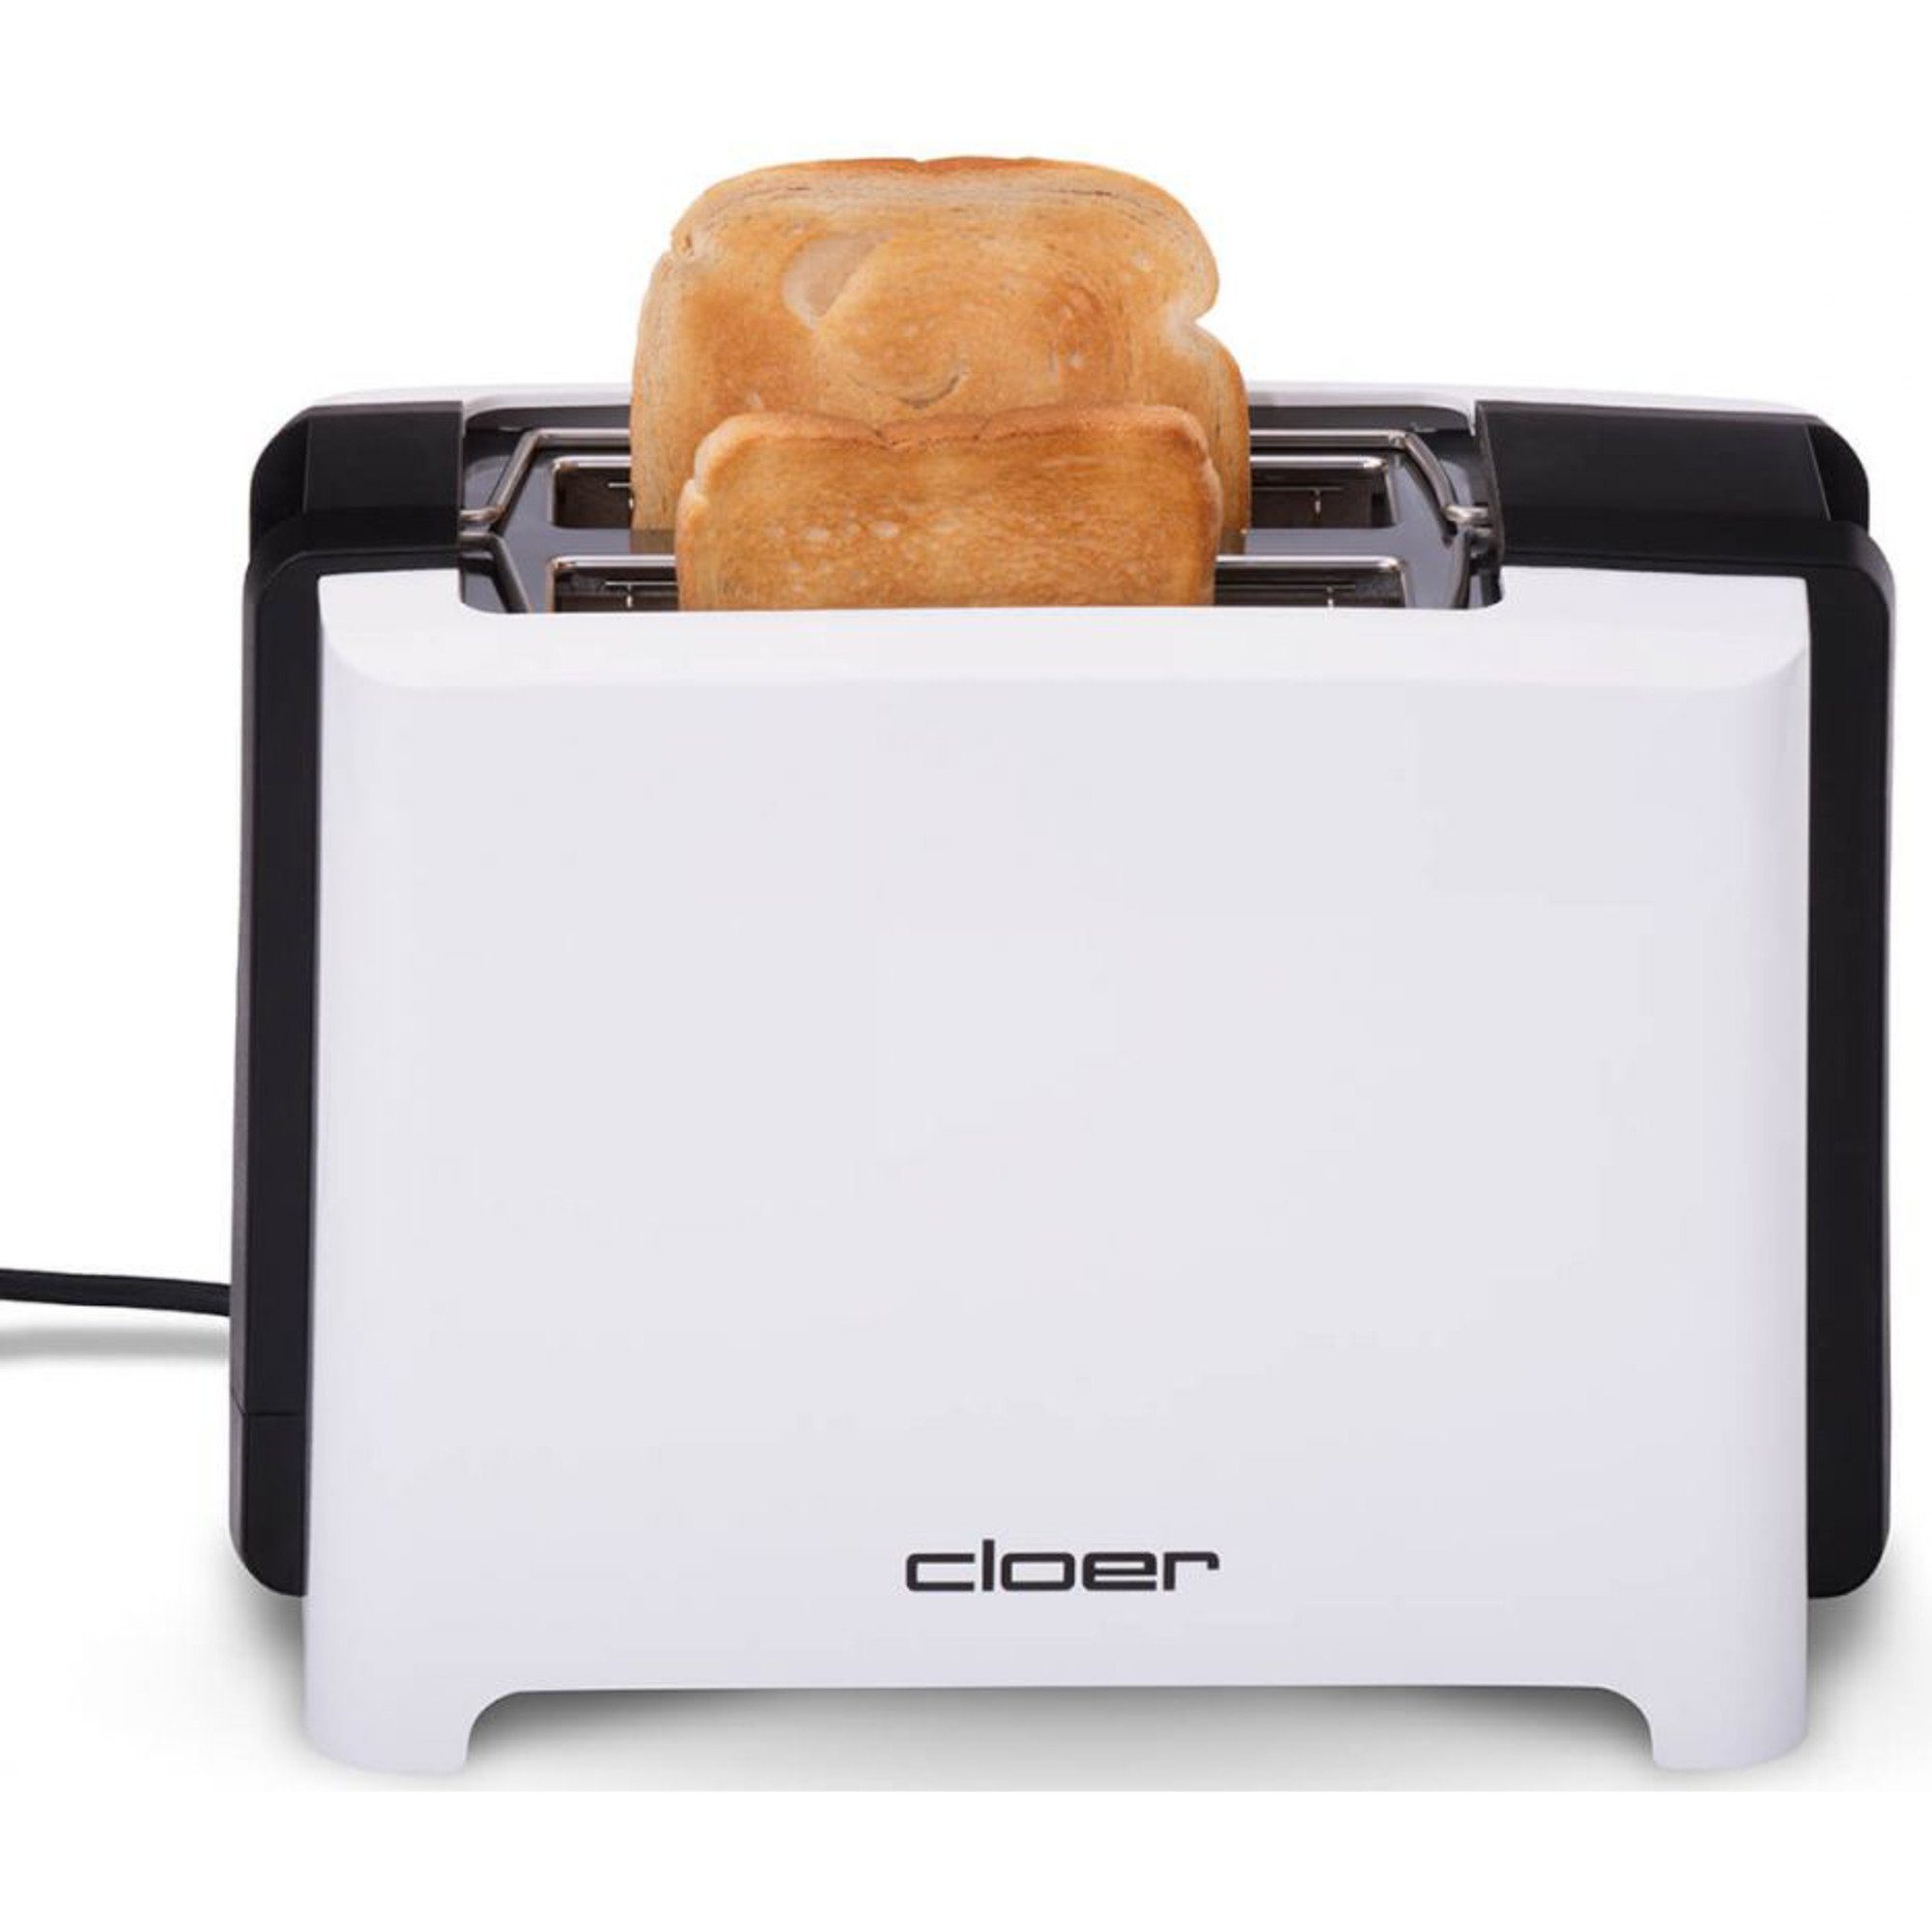 Full 3531, 2 Kaffeebereiter Watt, für Cloer Toaster (900 Size Cloer